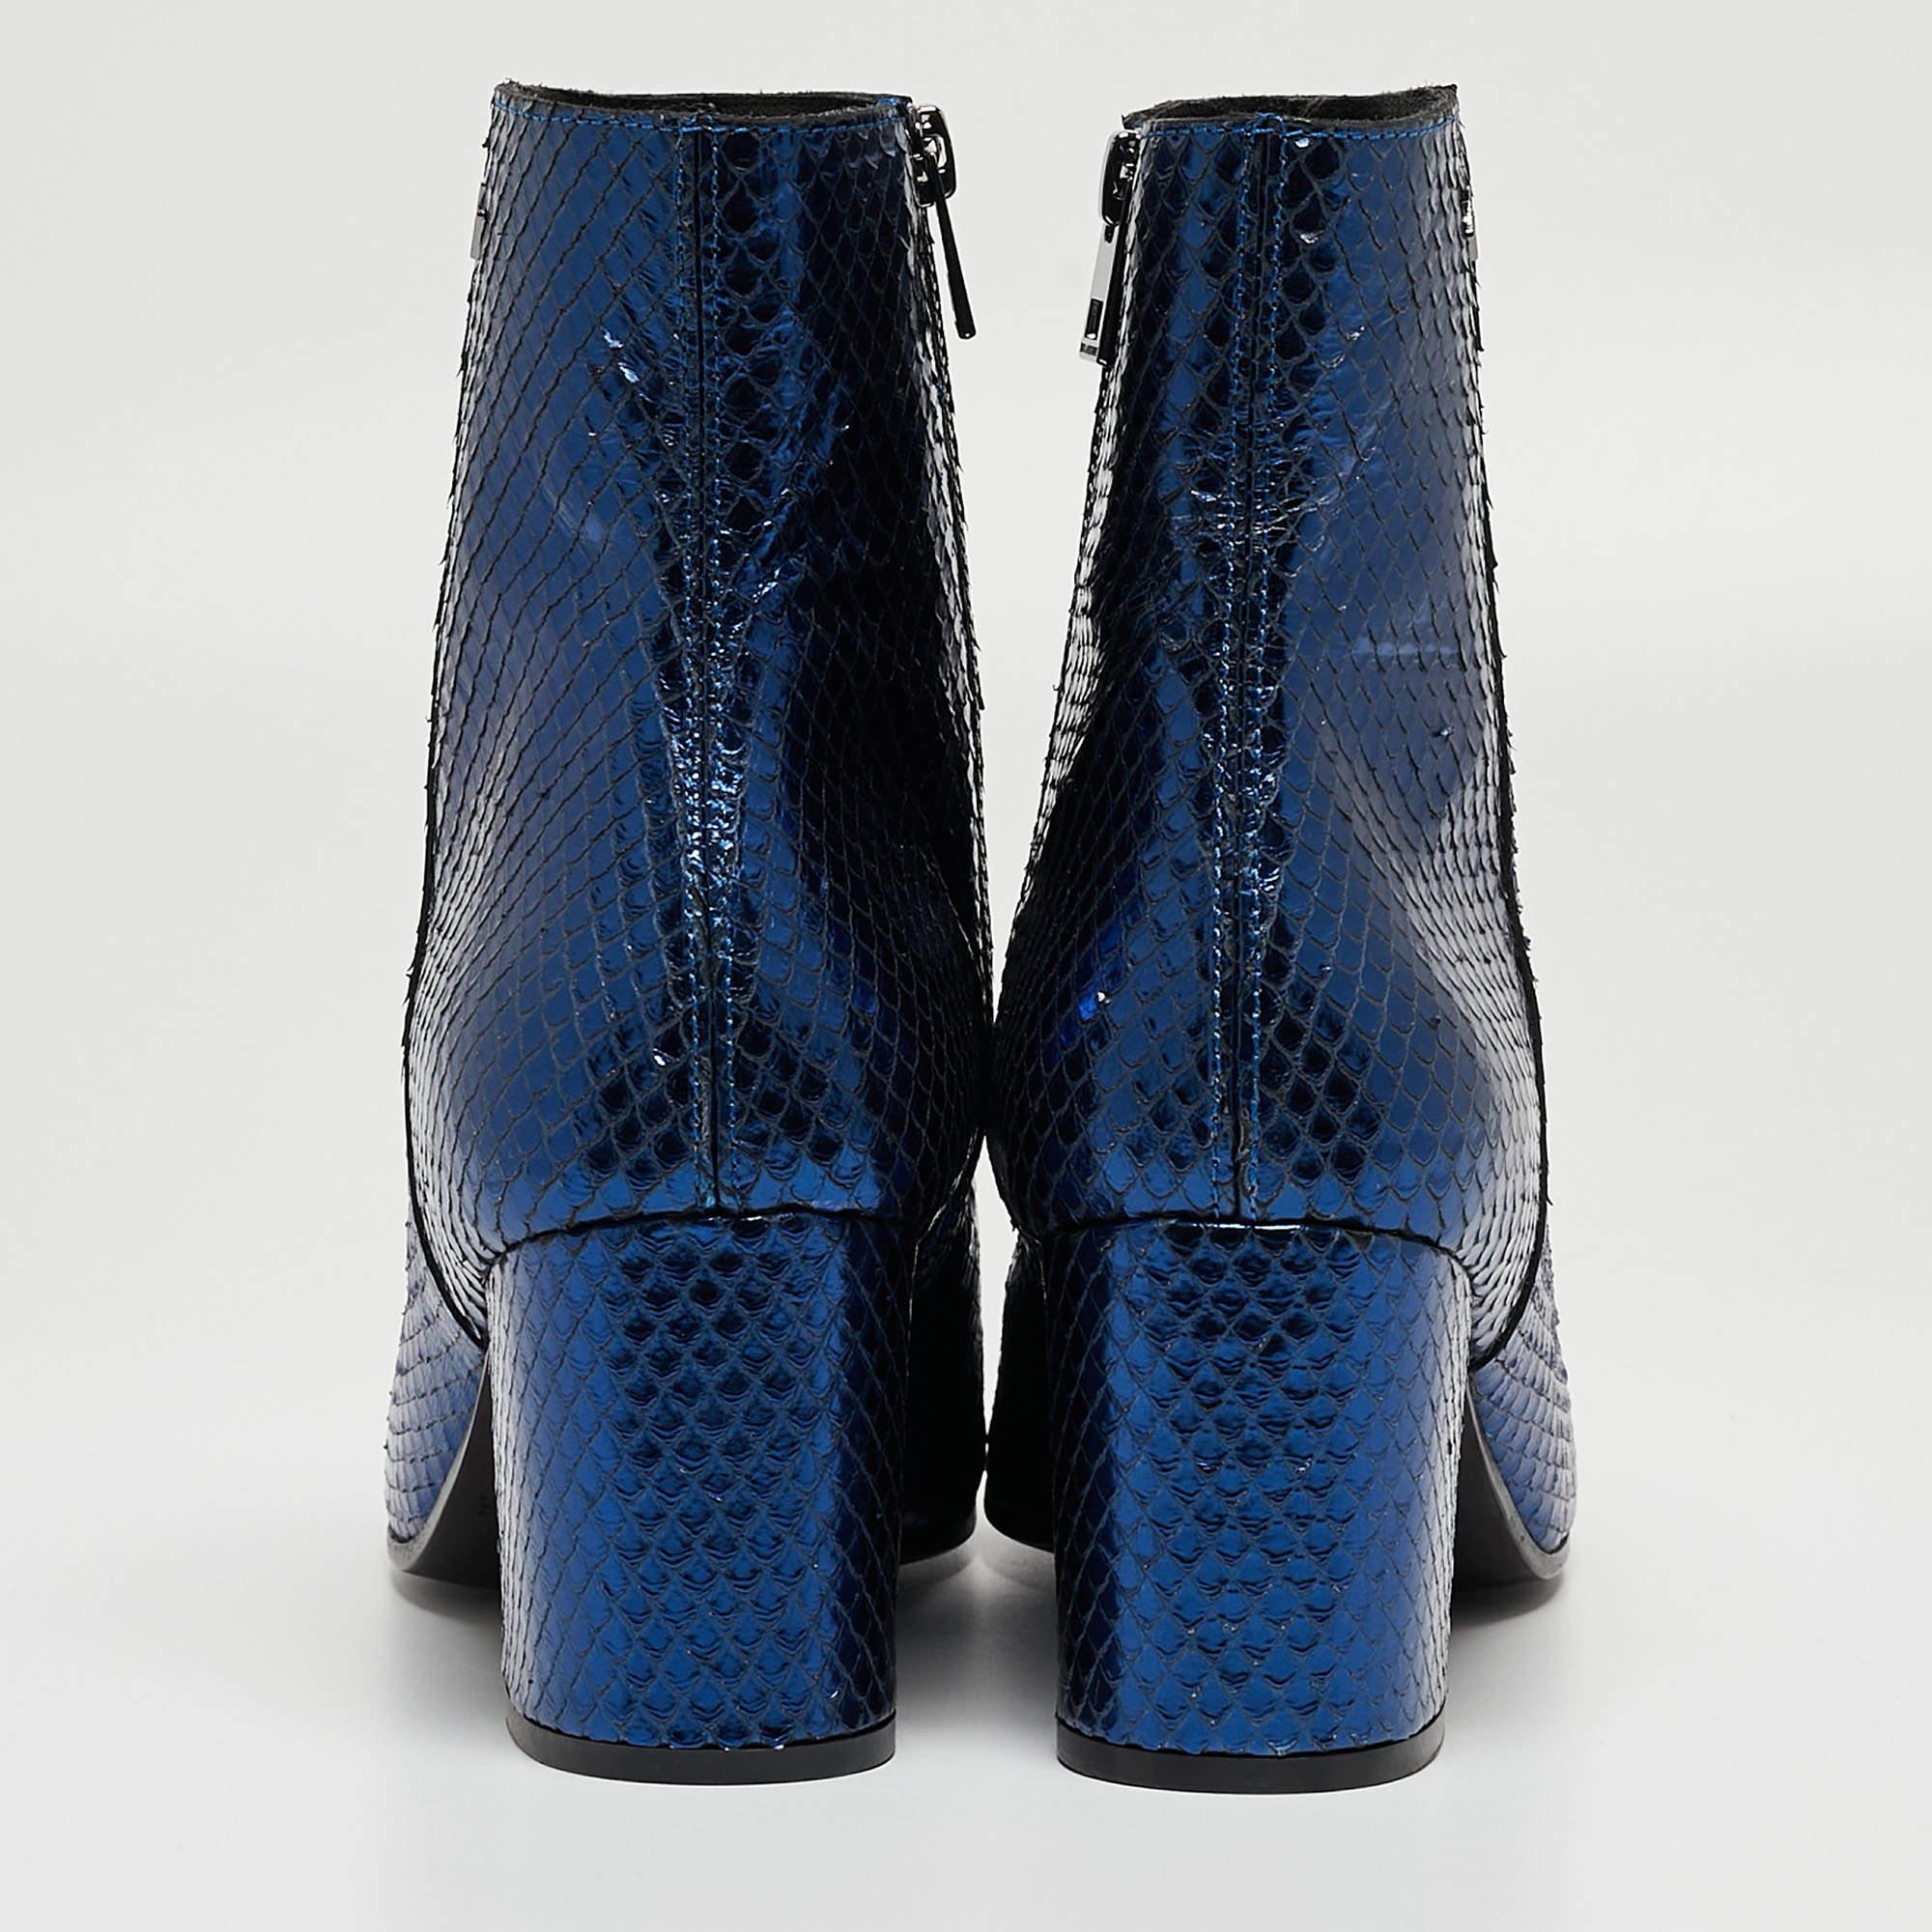 Zadiq & Voltaire Blue Python Embossed Leather Block Heel Ankle Boots Size 40 In Excellent Condition For Sale In Dubai, Al Qouz 2